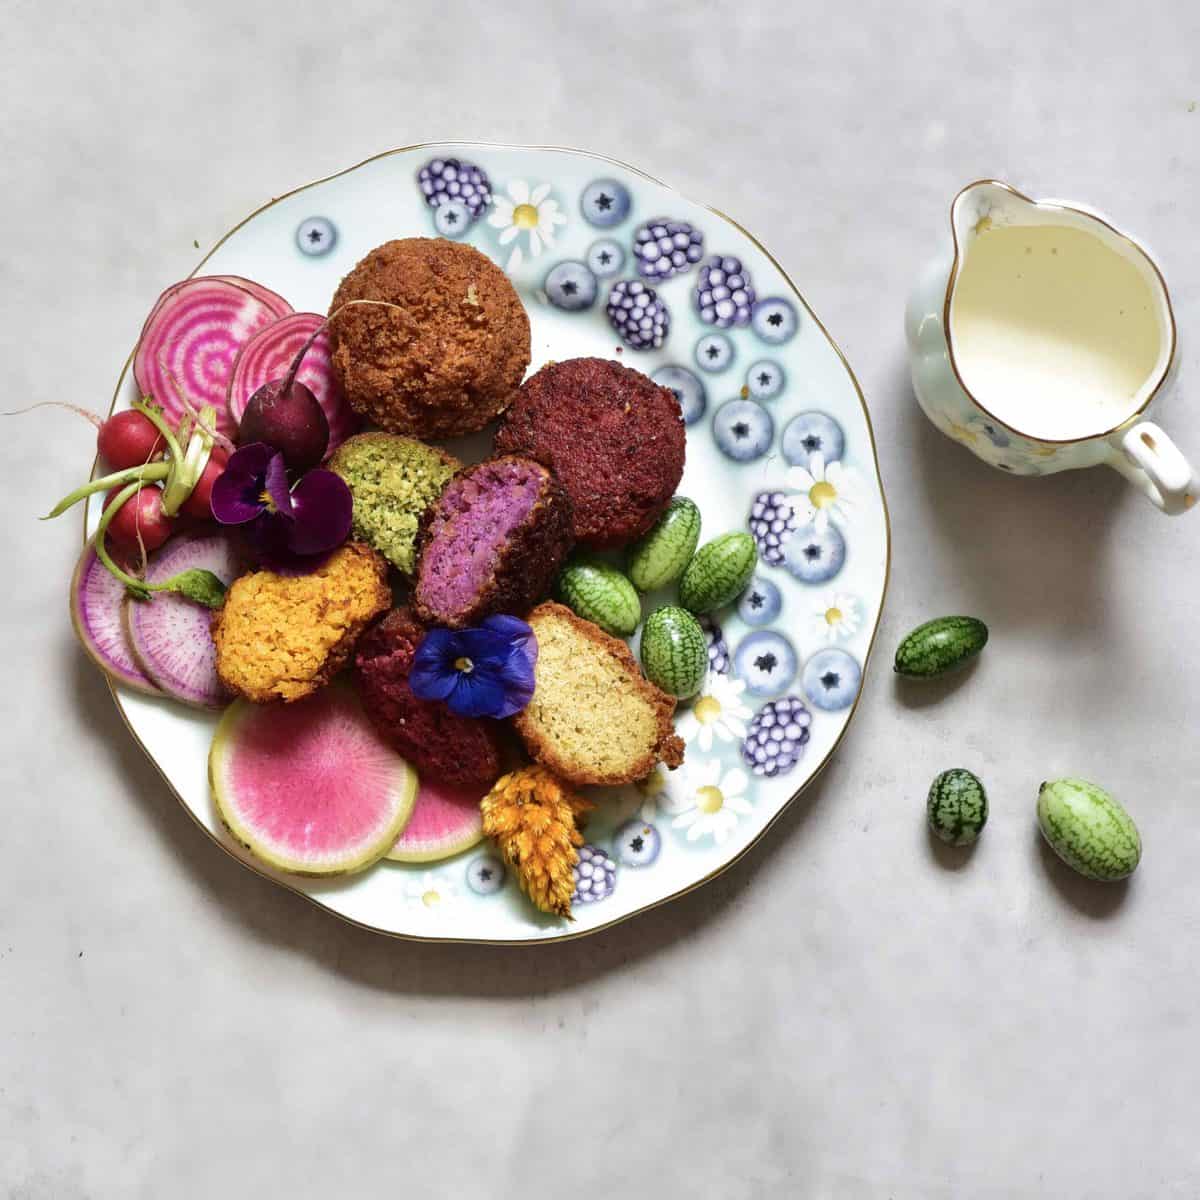 Rainbow falafel with veggies, yogurt tahini dip and edible flowers as part of a mezze platter